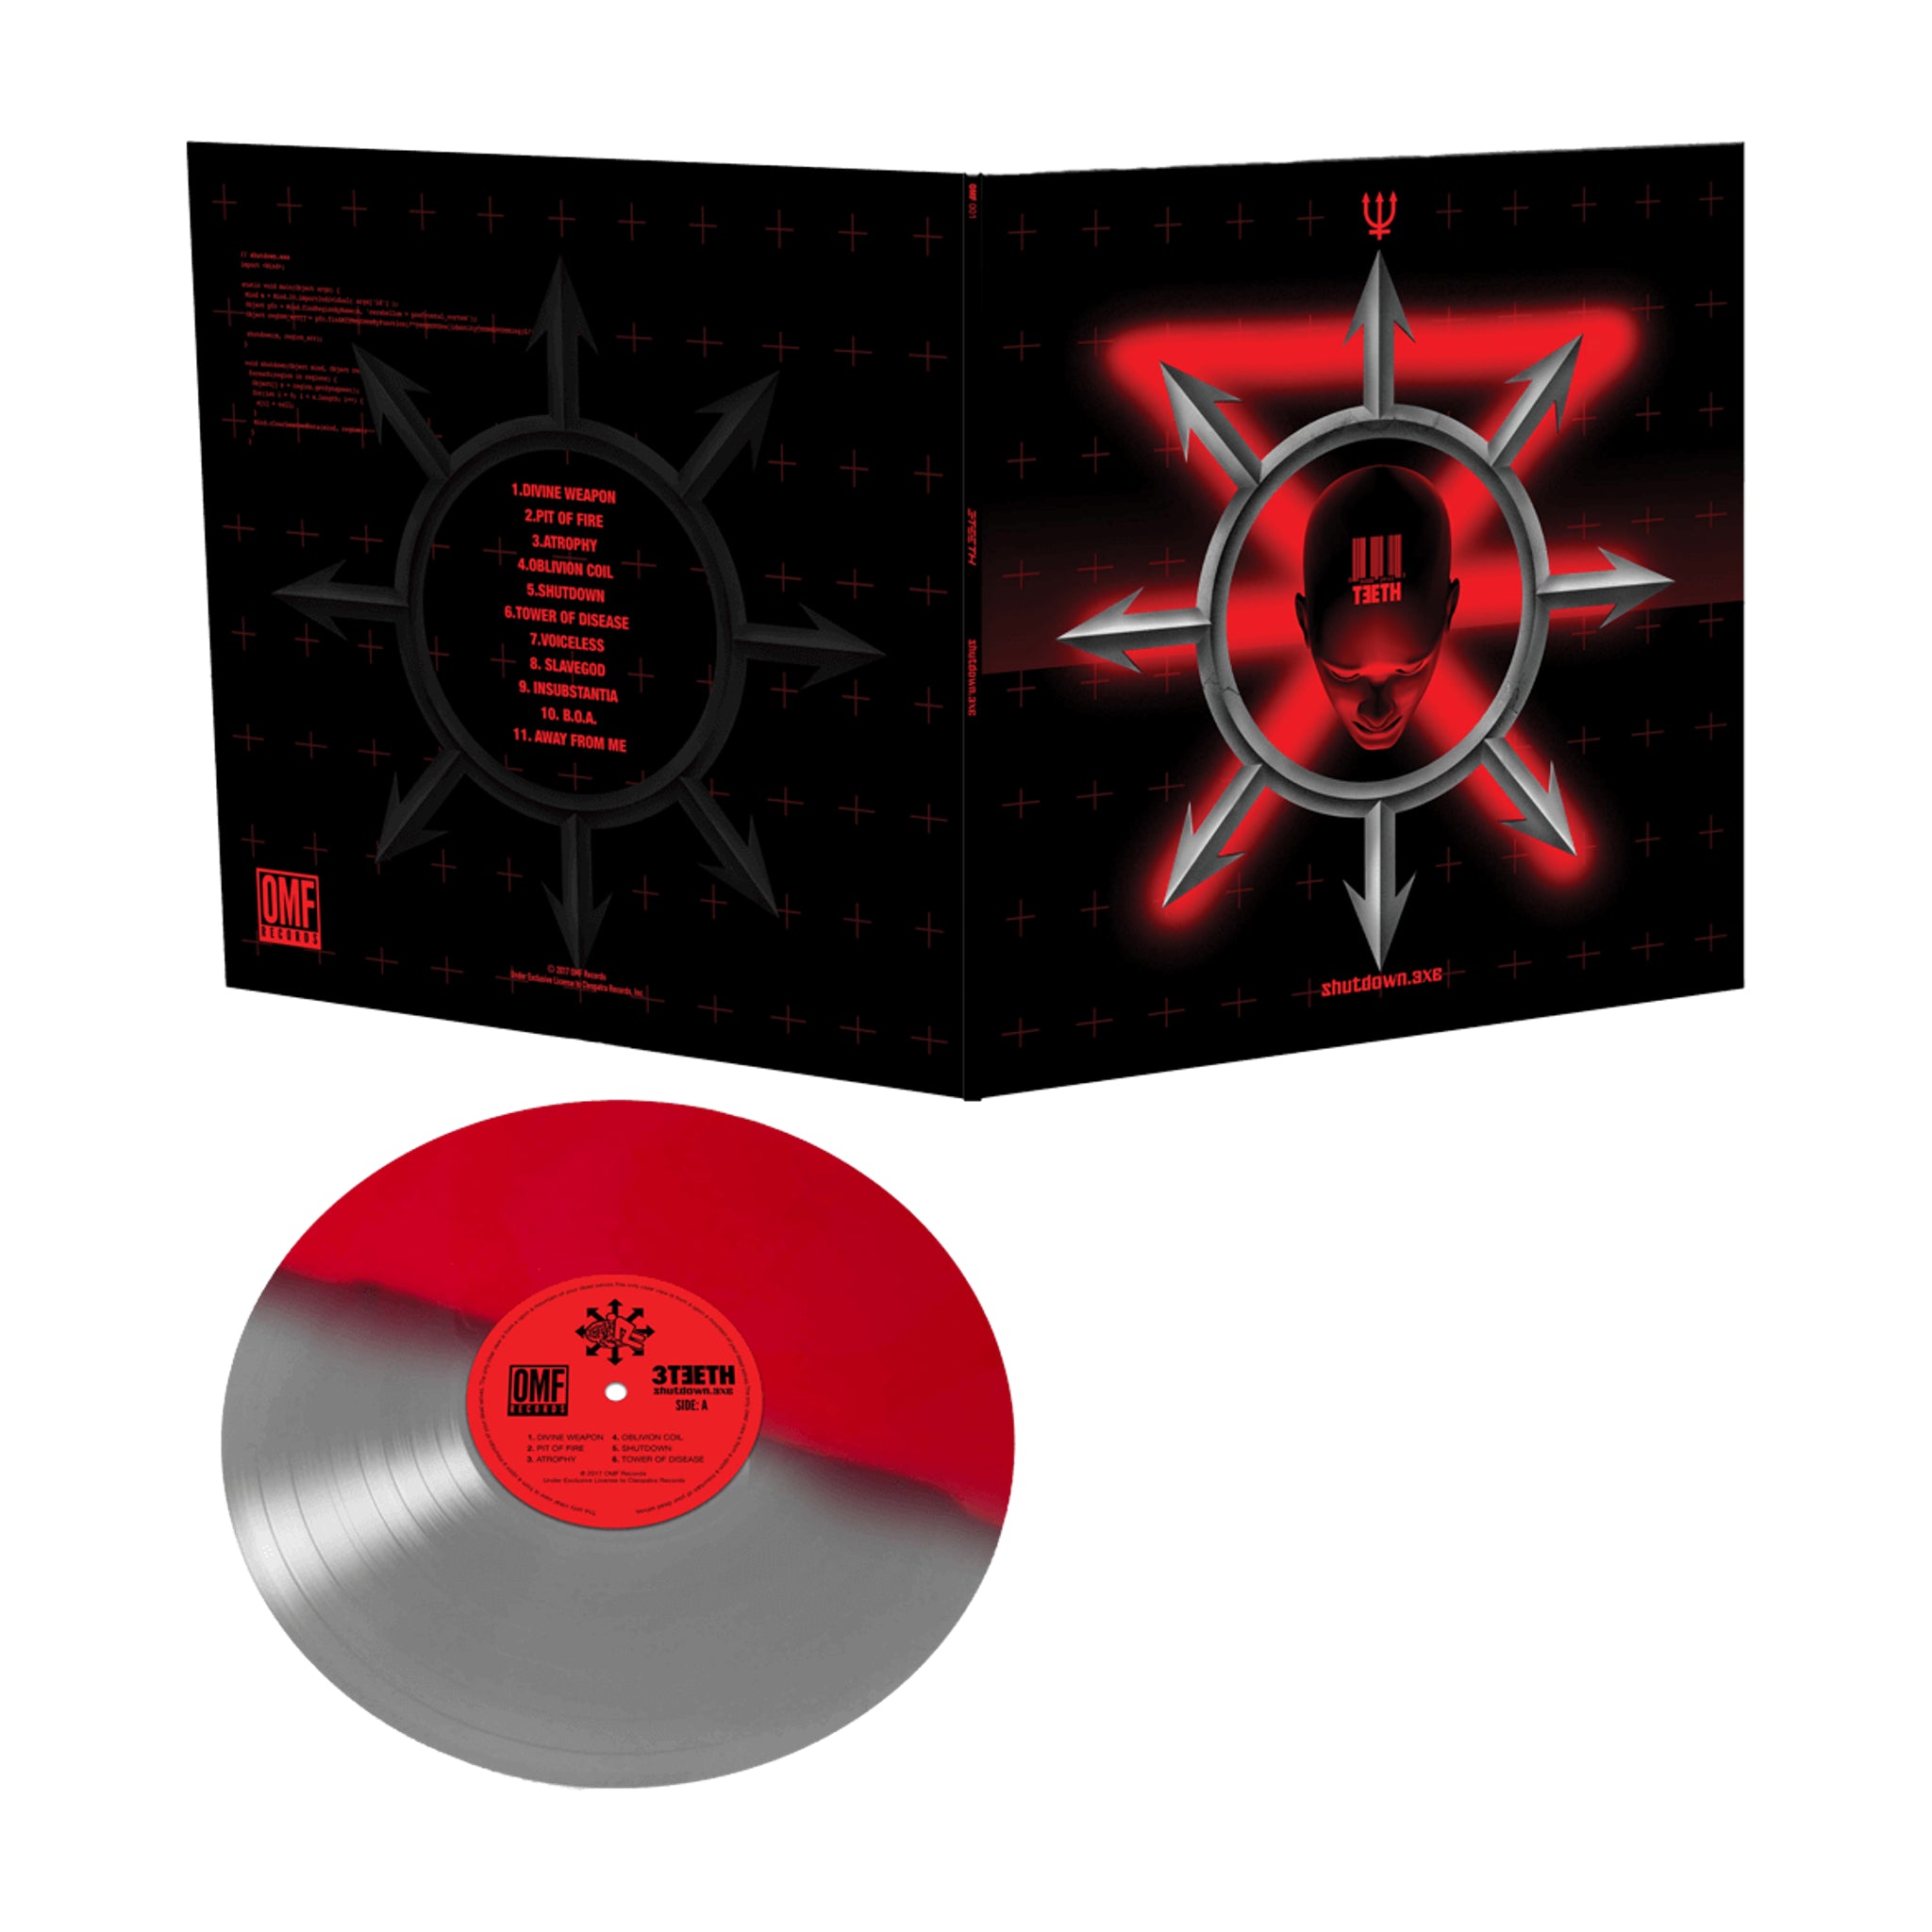 3teeth - Shutdown.exe (Red & Silver Vinyl)